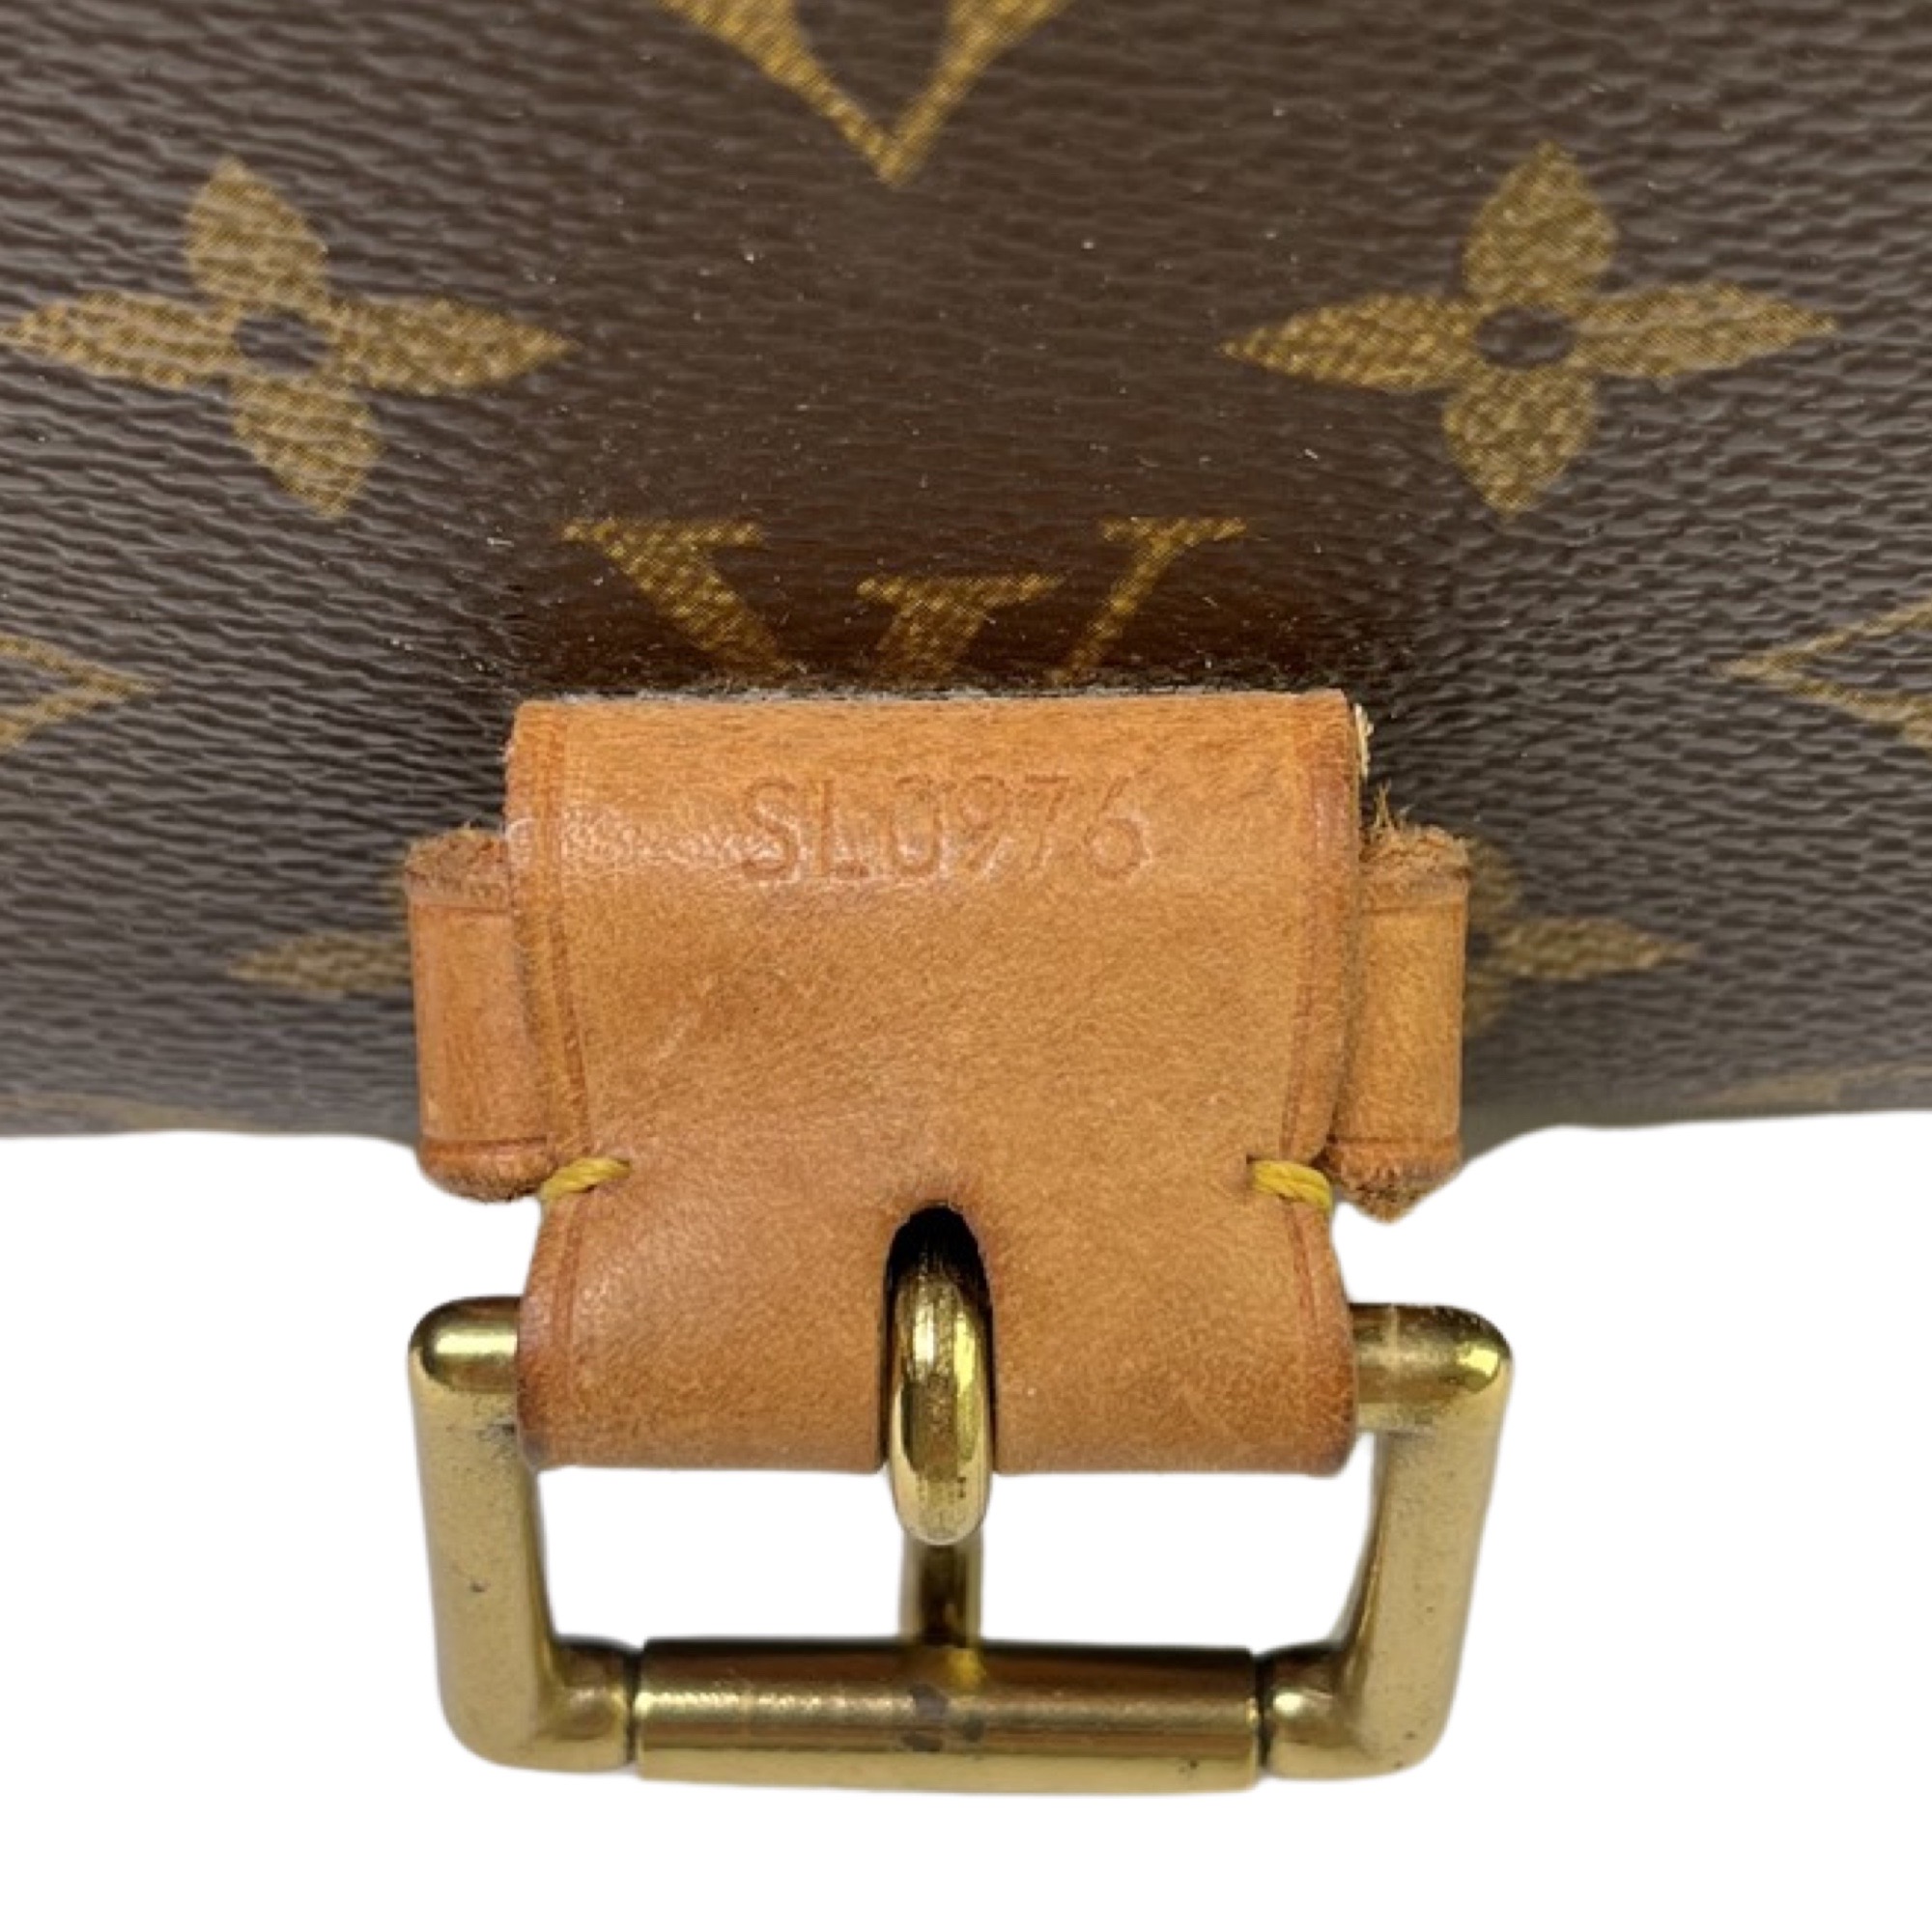 Authentic Louis Vuitton Monogram Canvas Small Beverly Clutch Pochette Bag